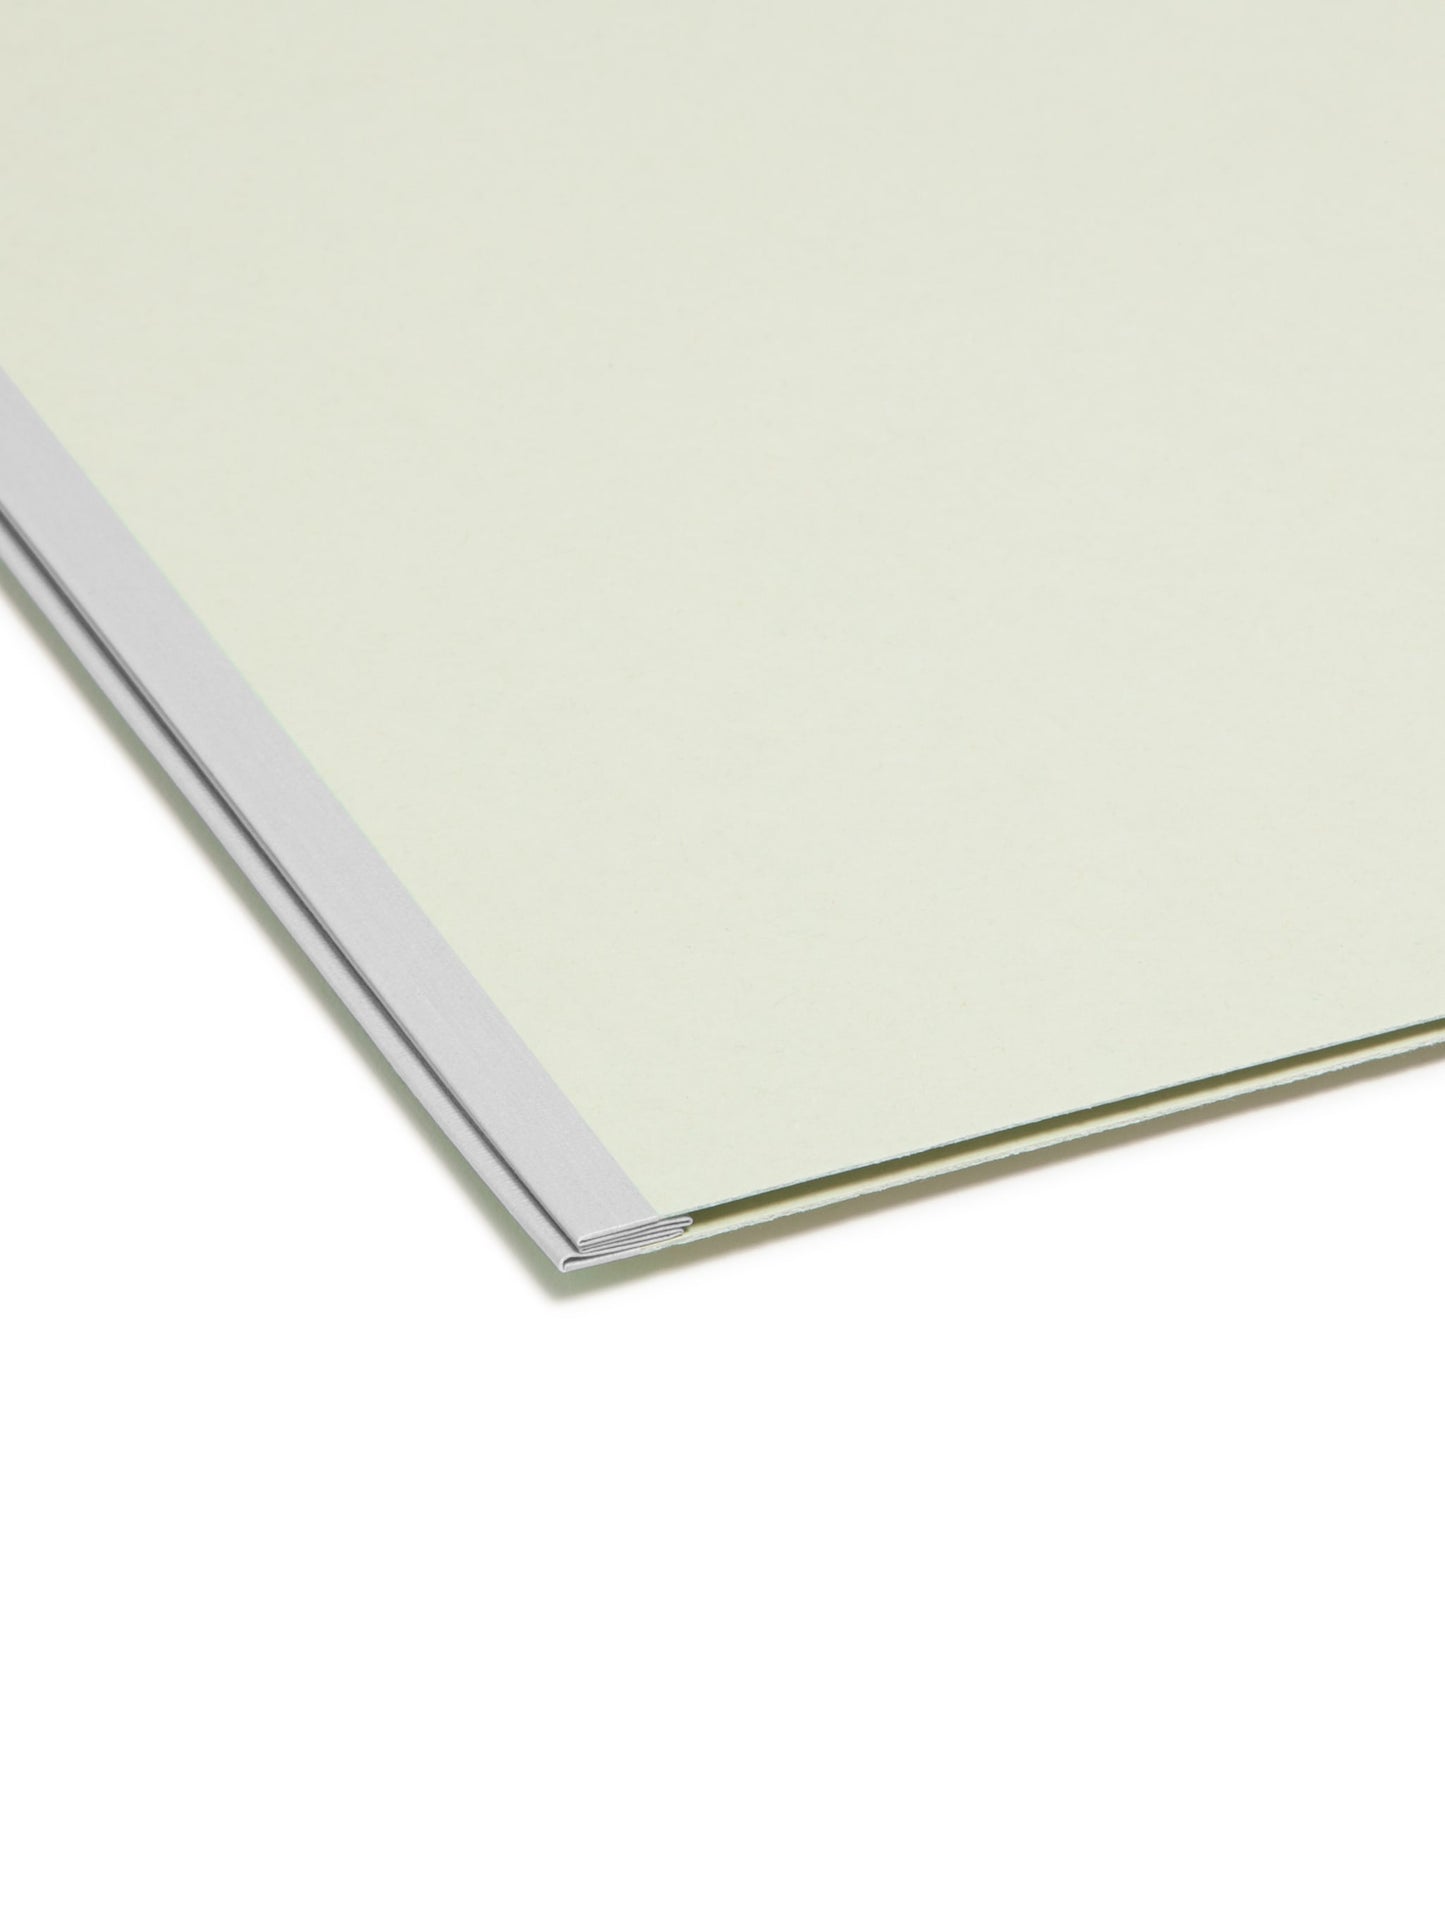 Pressboard Fastener File Folders, 2 inch Expansion, Gray/Green Color, Legal Size, 